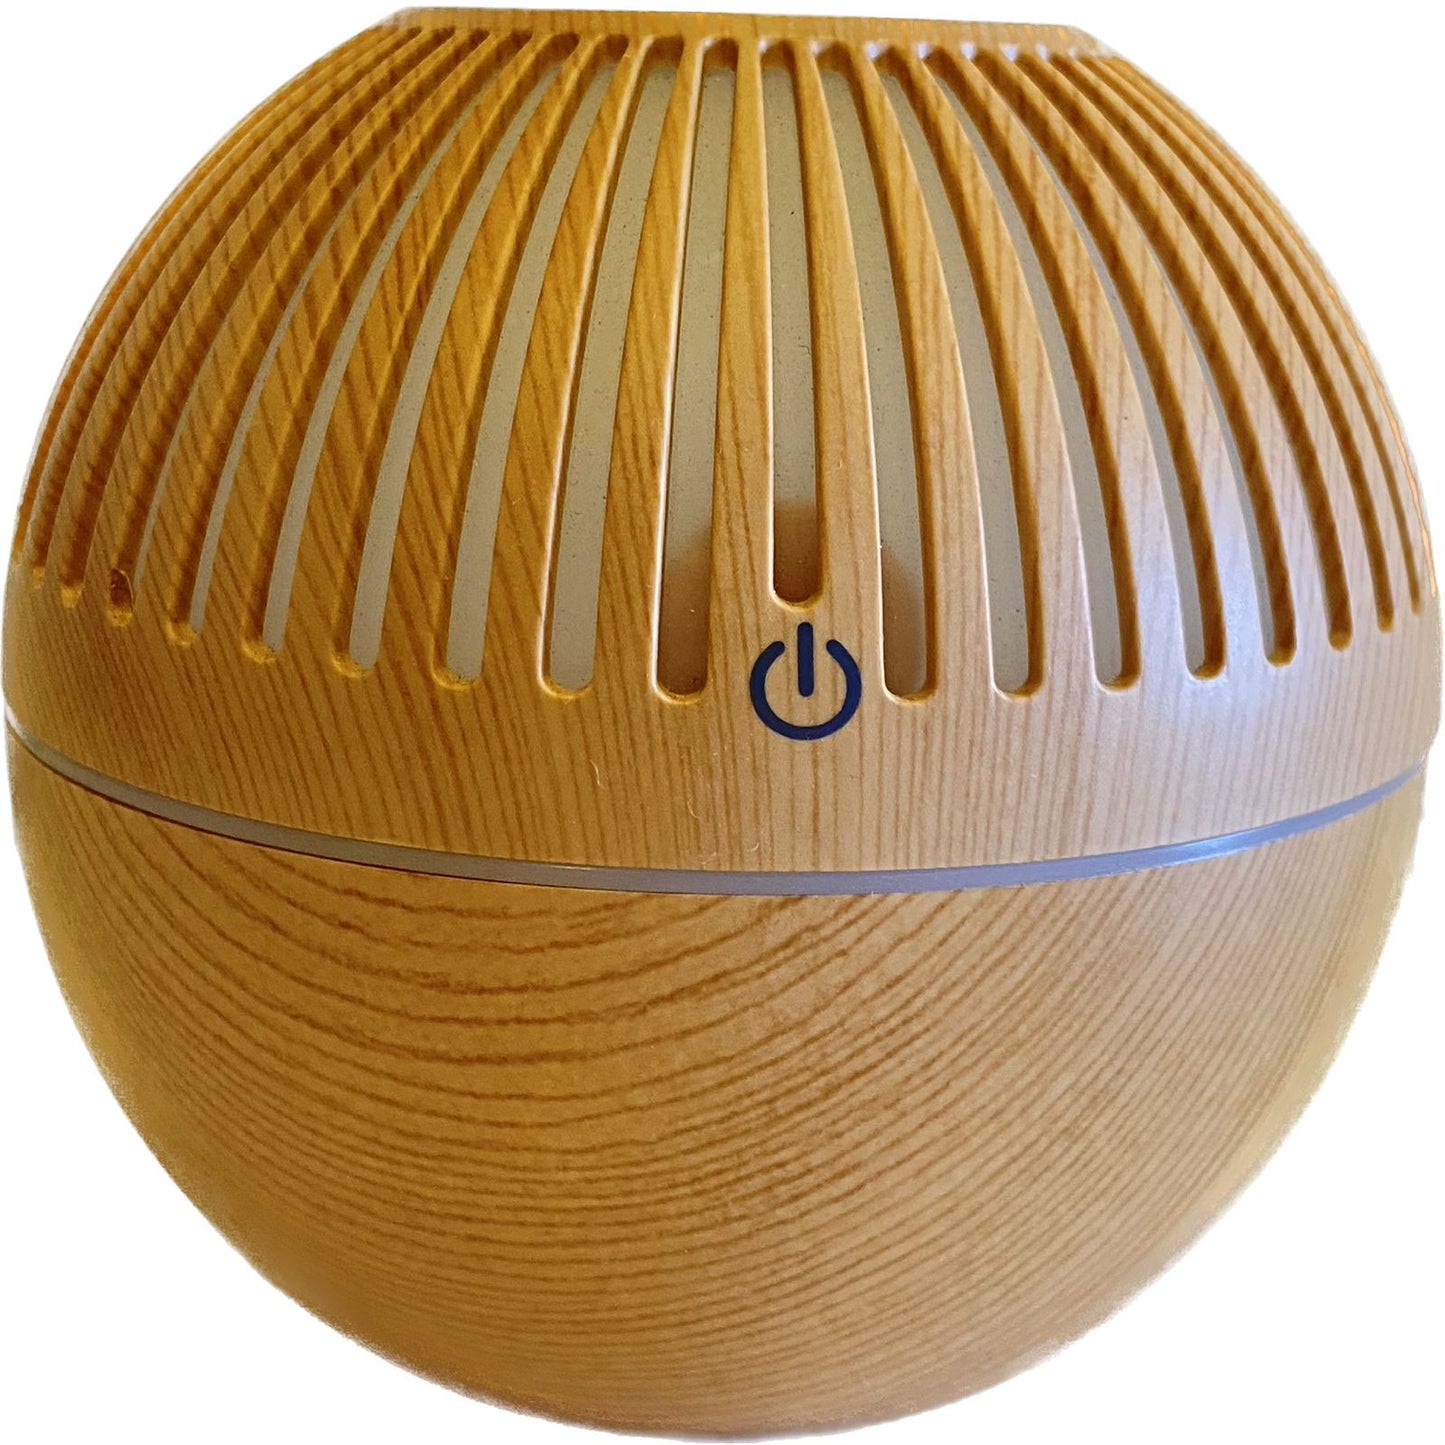 Ball Lighting Humidifier